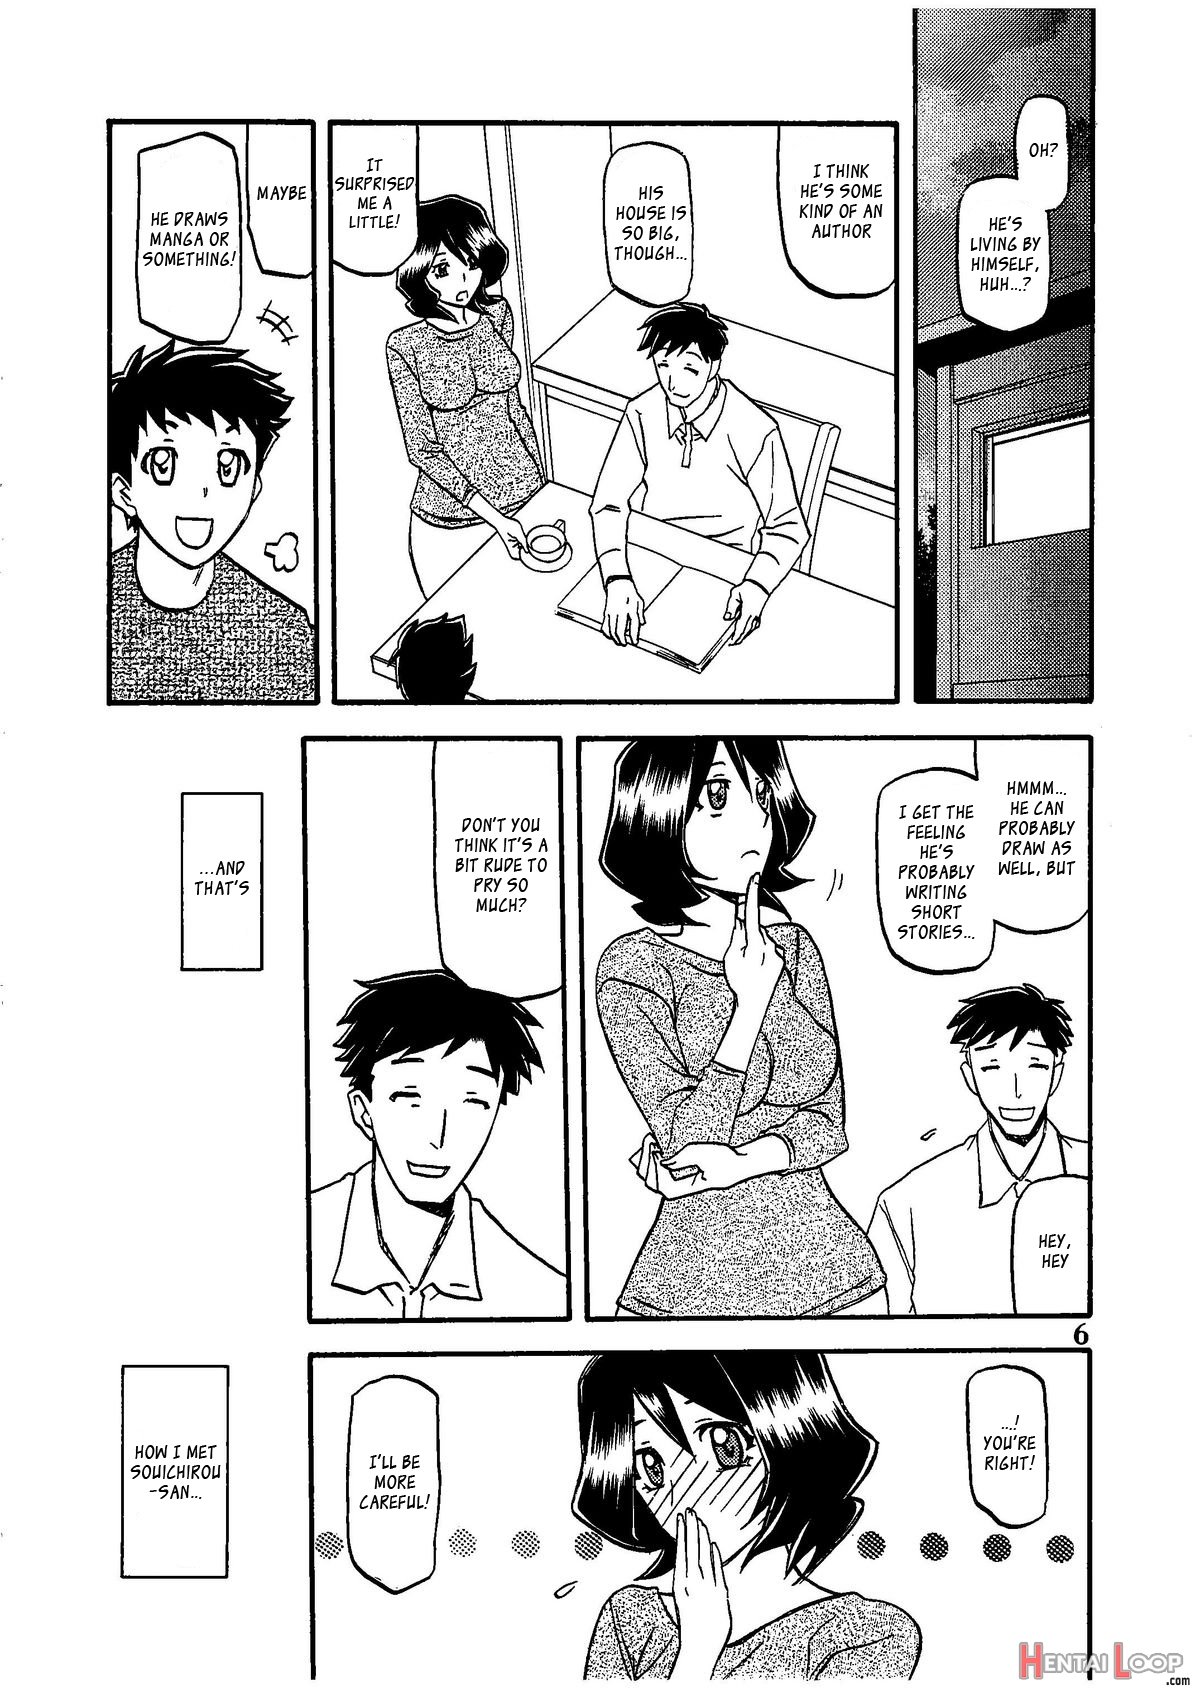 Saneishou page 10